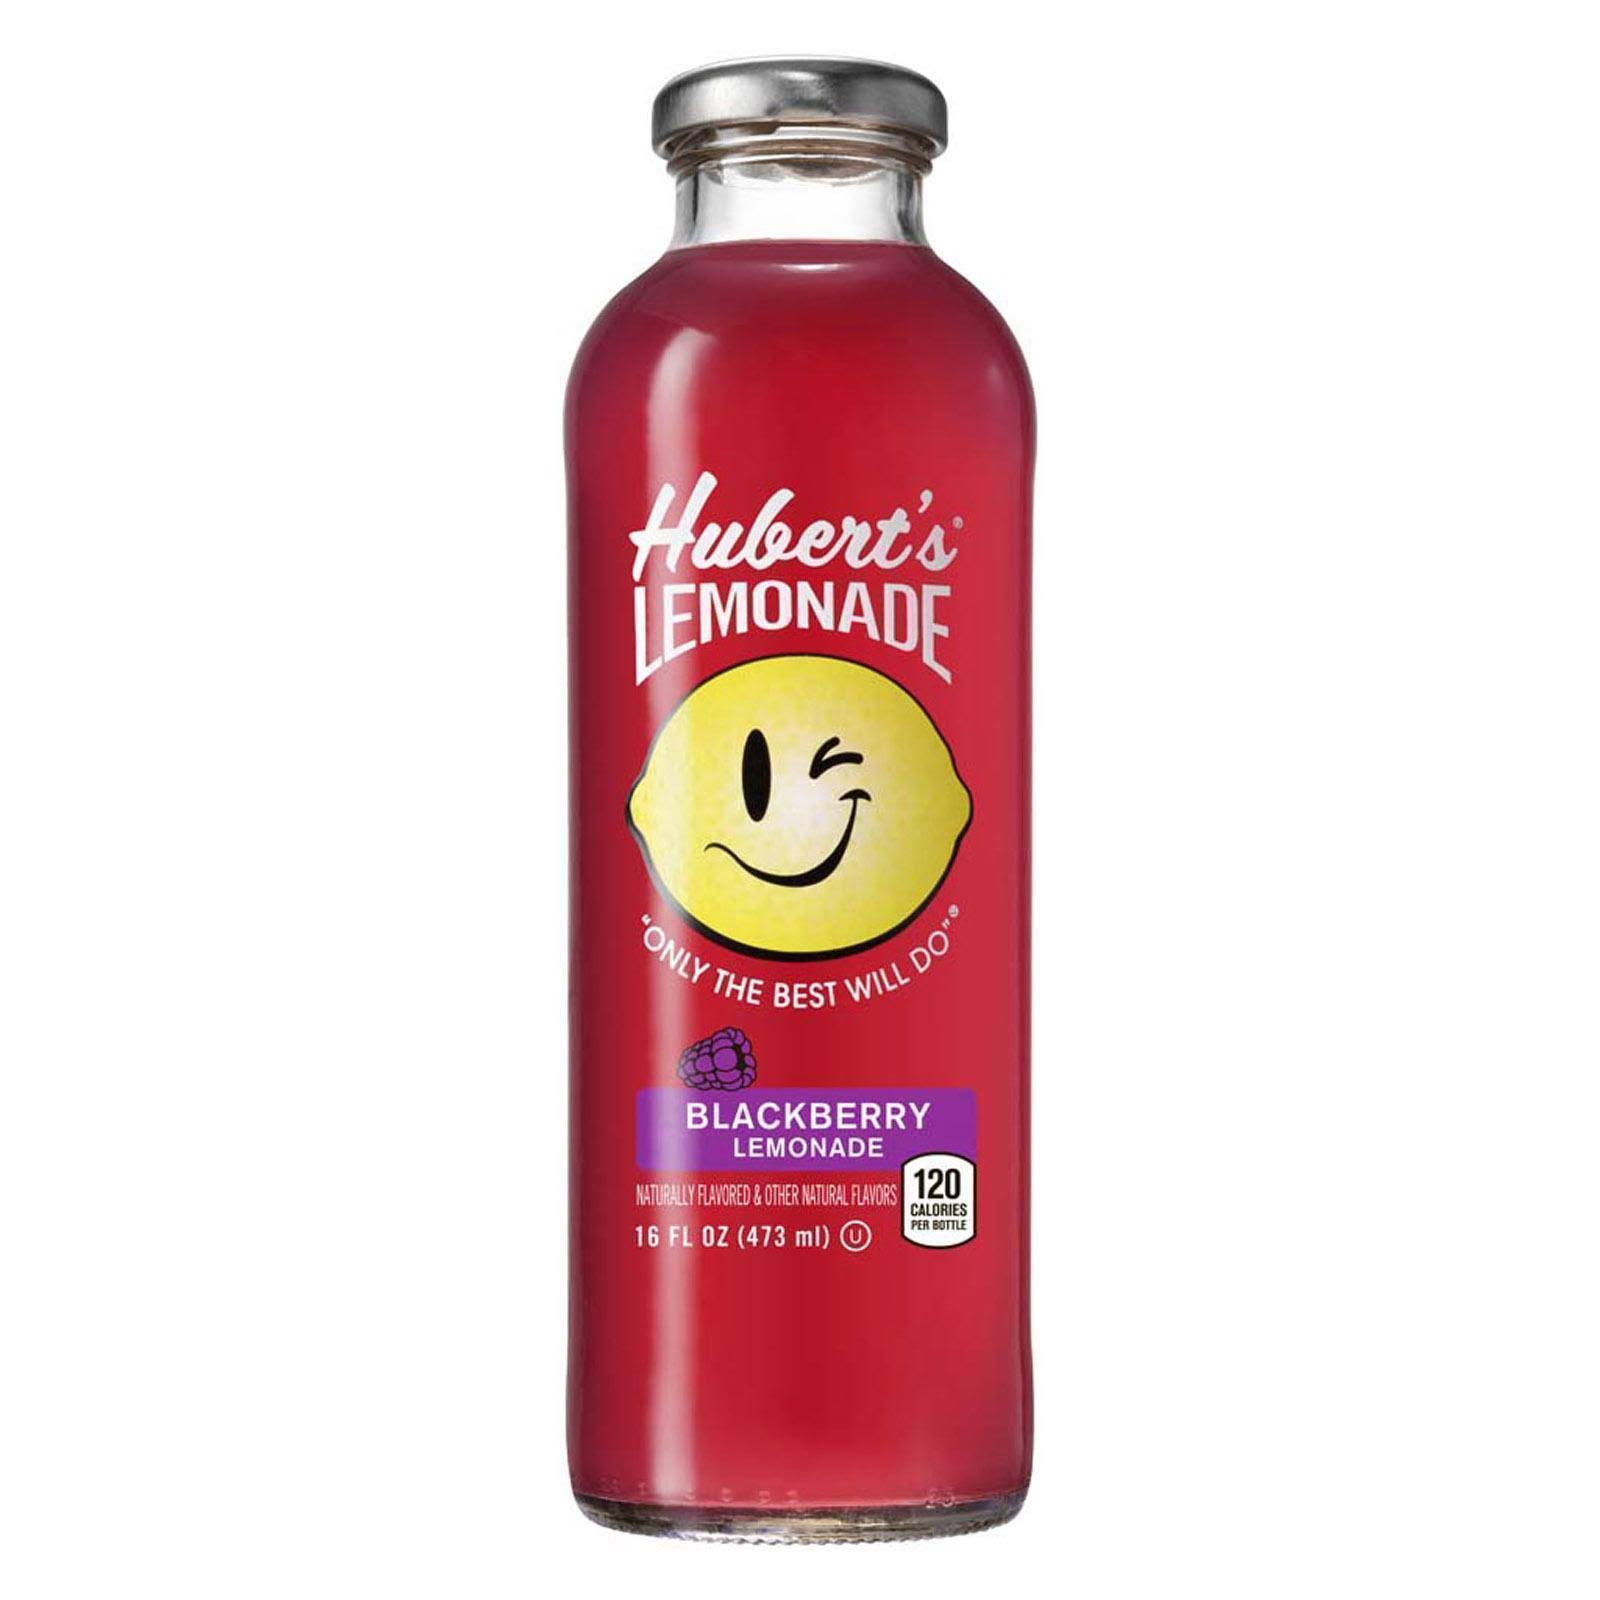 Hubert's Lemonade Juice - Blackberry Lemonade